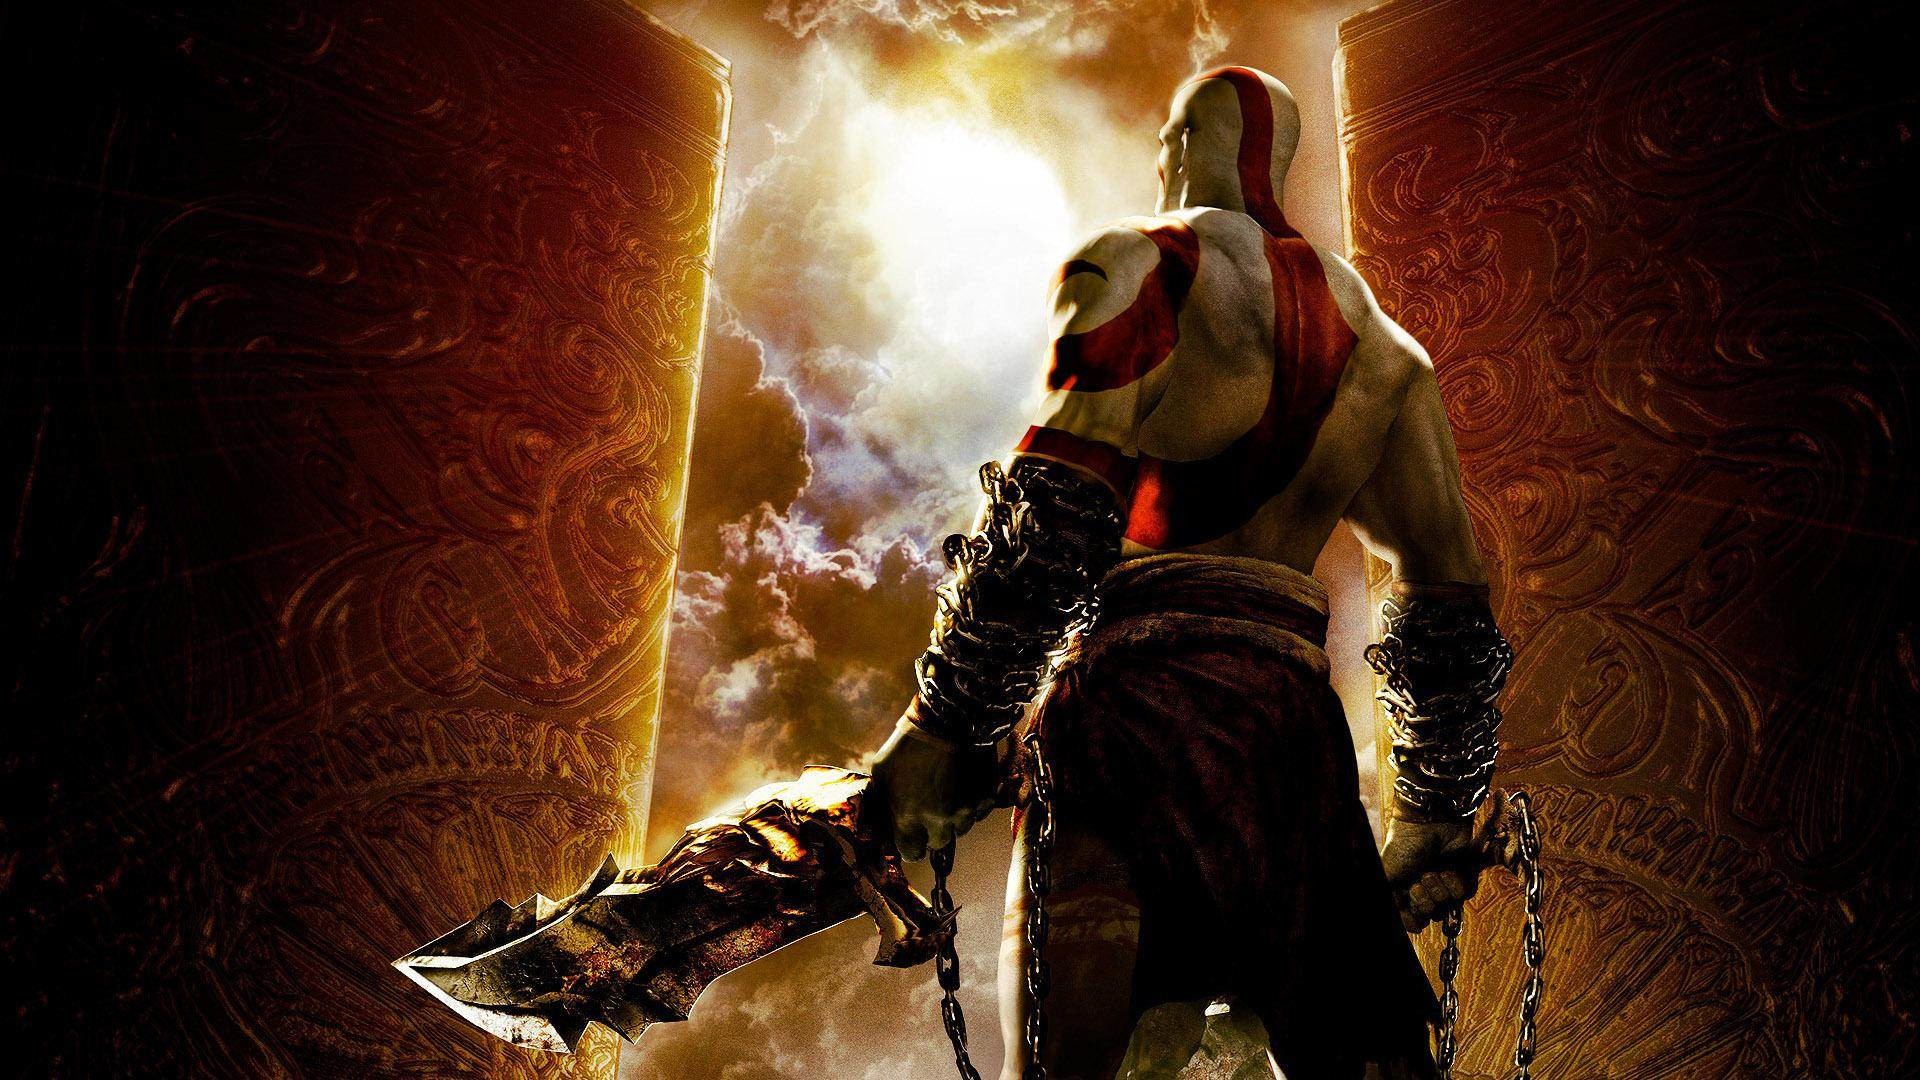 kratos wallpaper,action adventure game,pc game,cg artwork,adventure game,fictional character